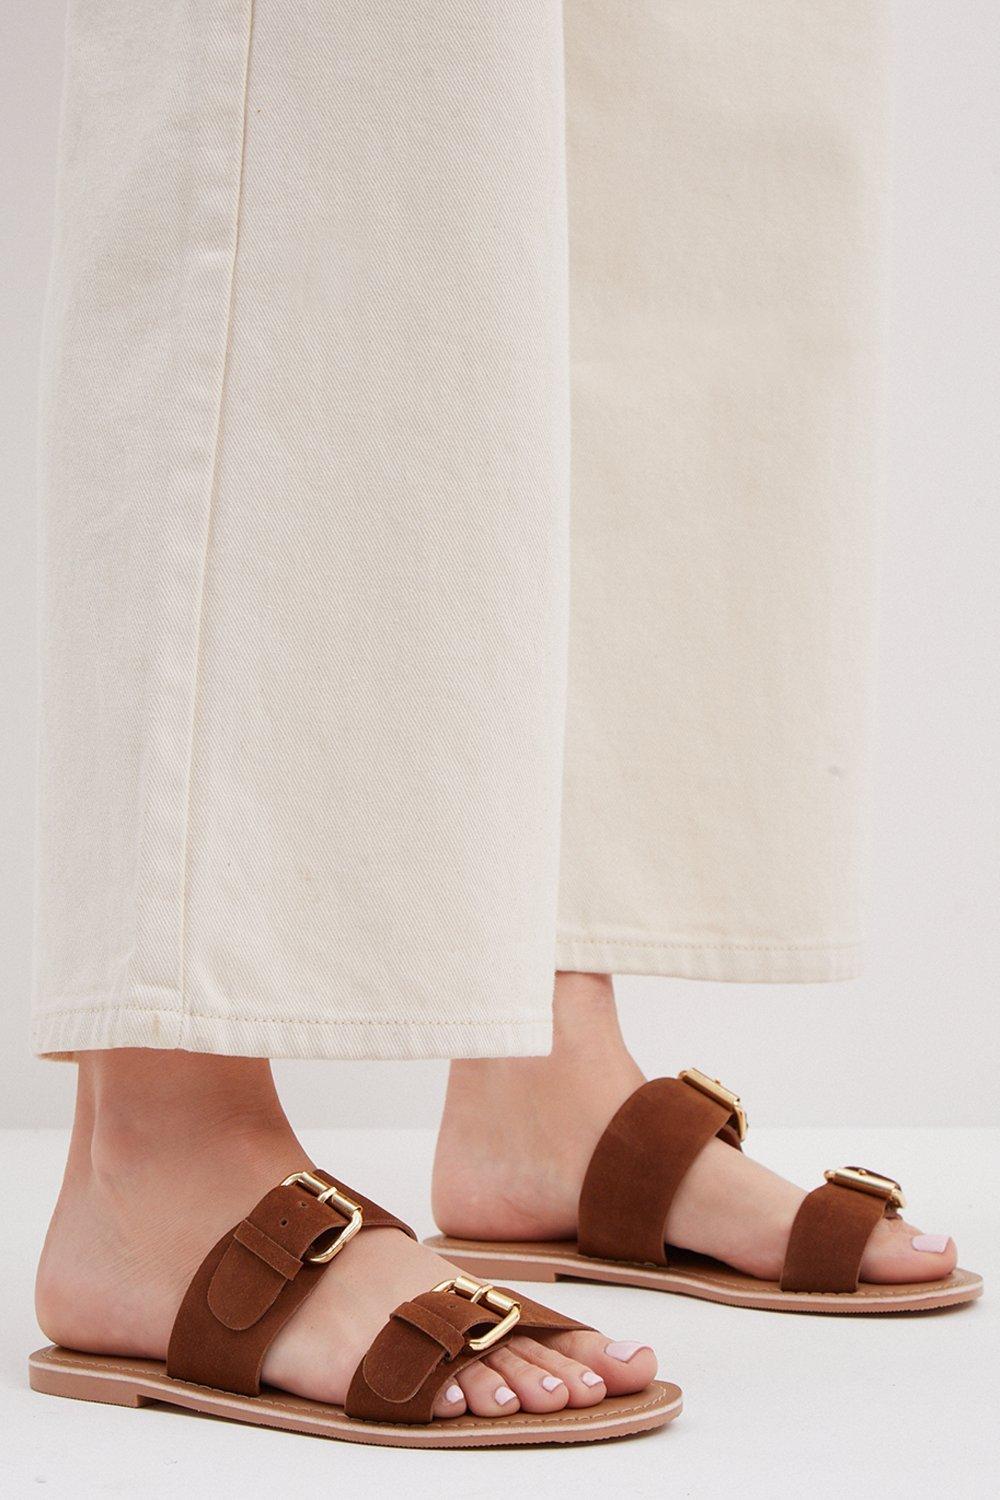 Sandals | Leather Jolie Double Strap Buckle Sliders | Dorothy Perkins